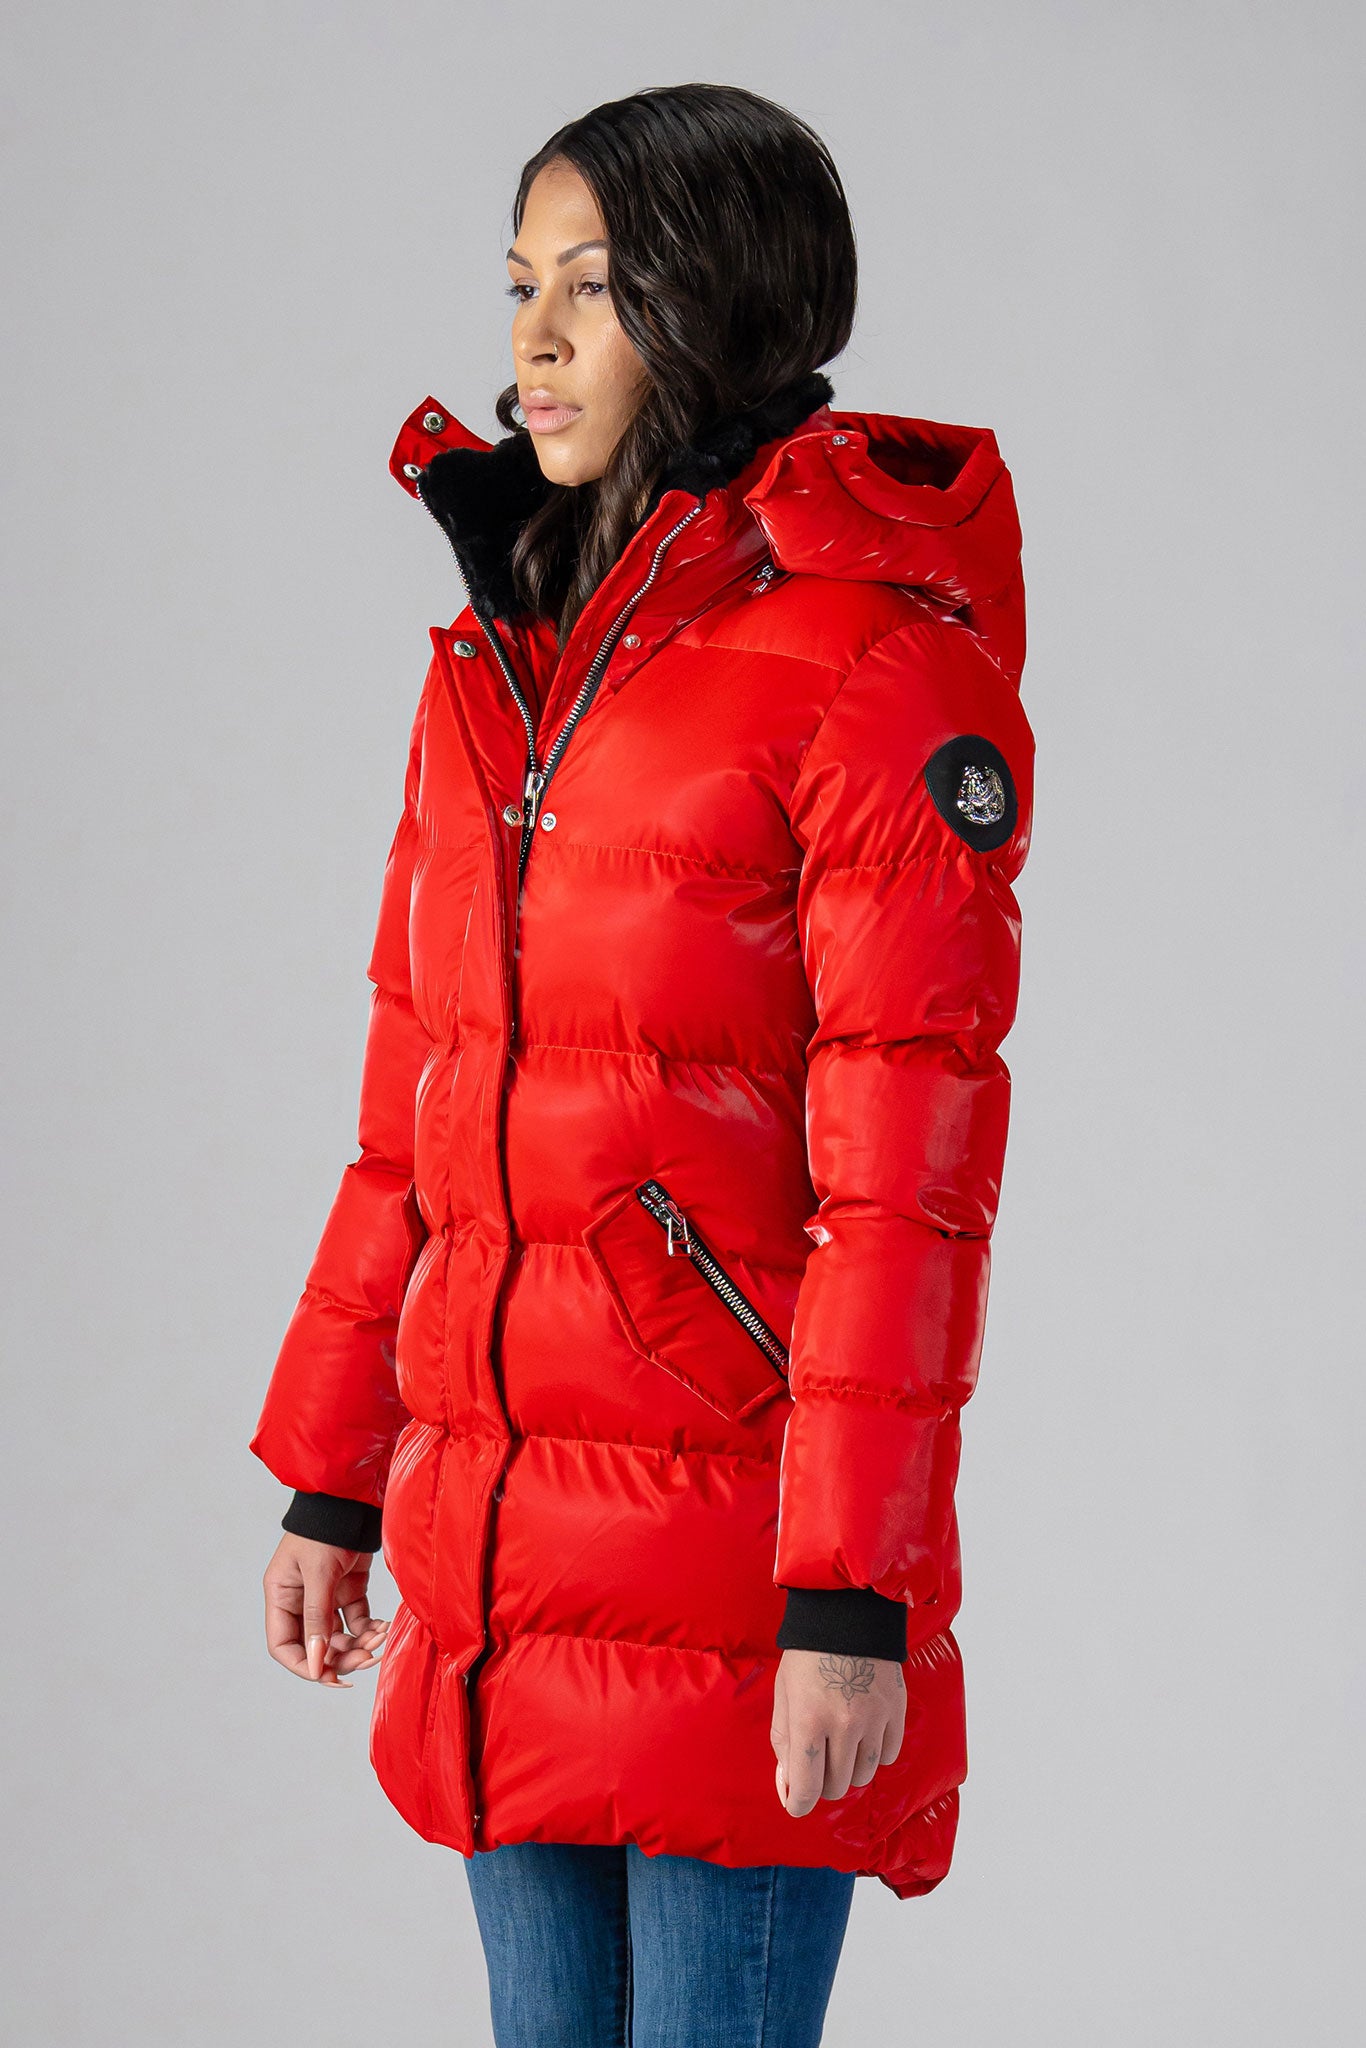 Woodpecker Women's Penguin Long Winter coat. High-end Canadian designer winter coat for women in 